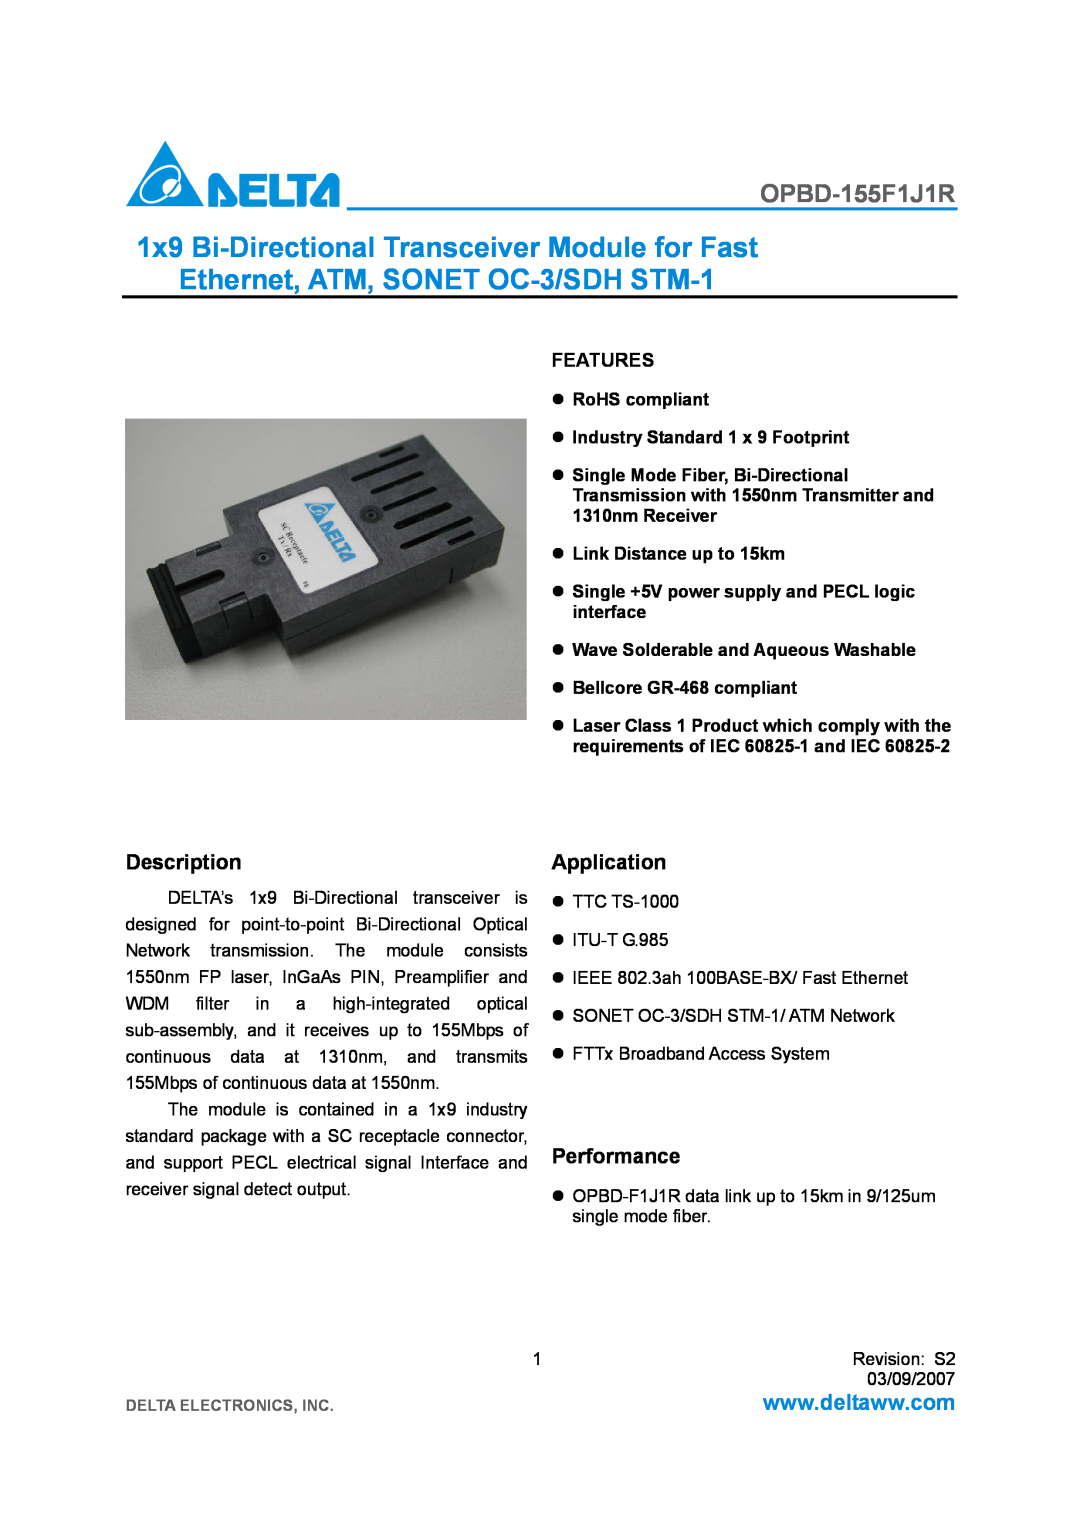 Delta Electronics OPBD-155F1J1R manual Description, Application, Performance, Link Distance up to 15km, Features 